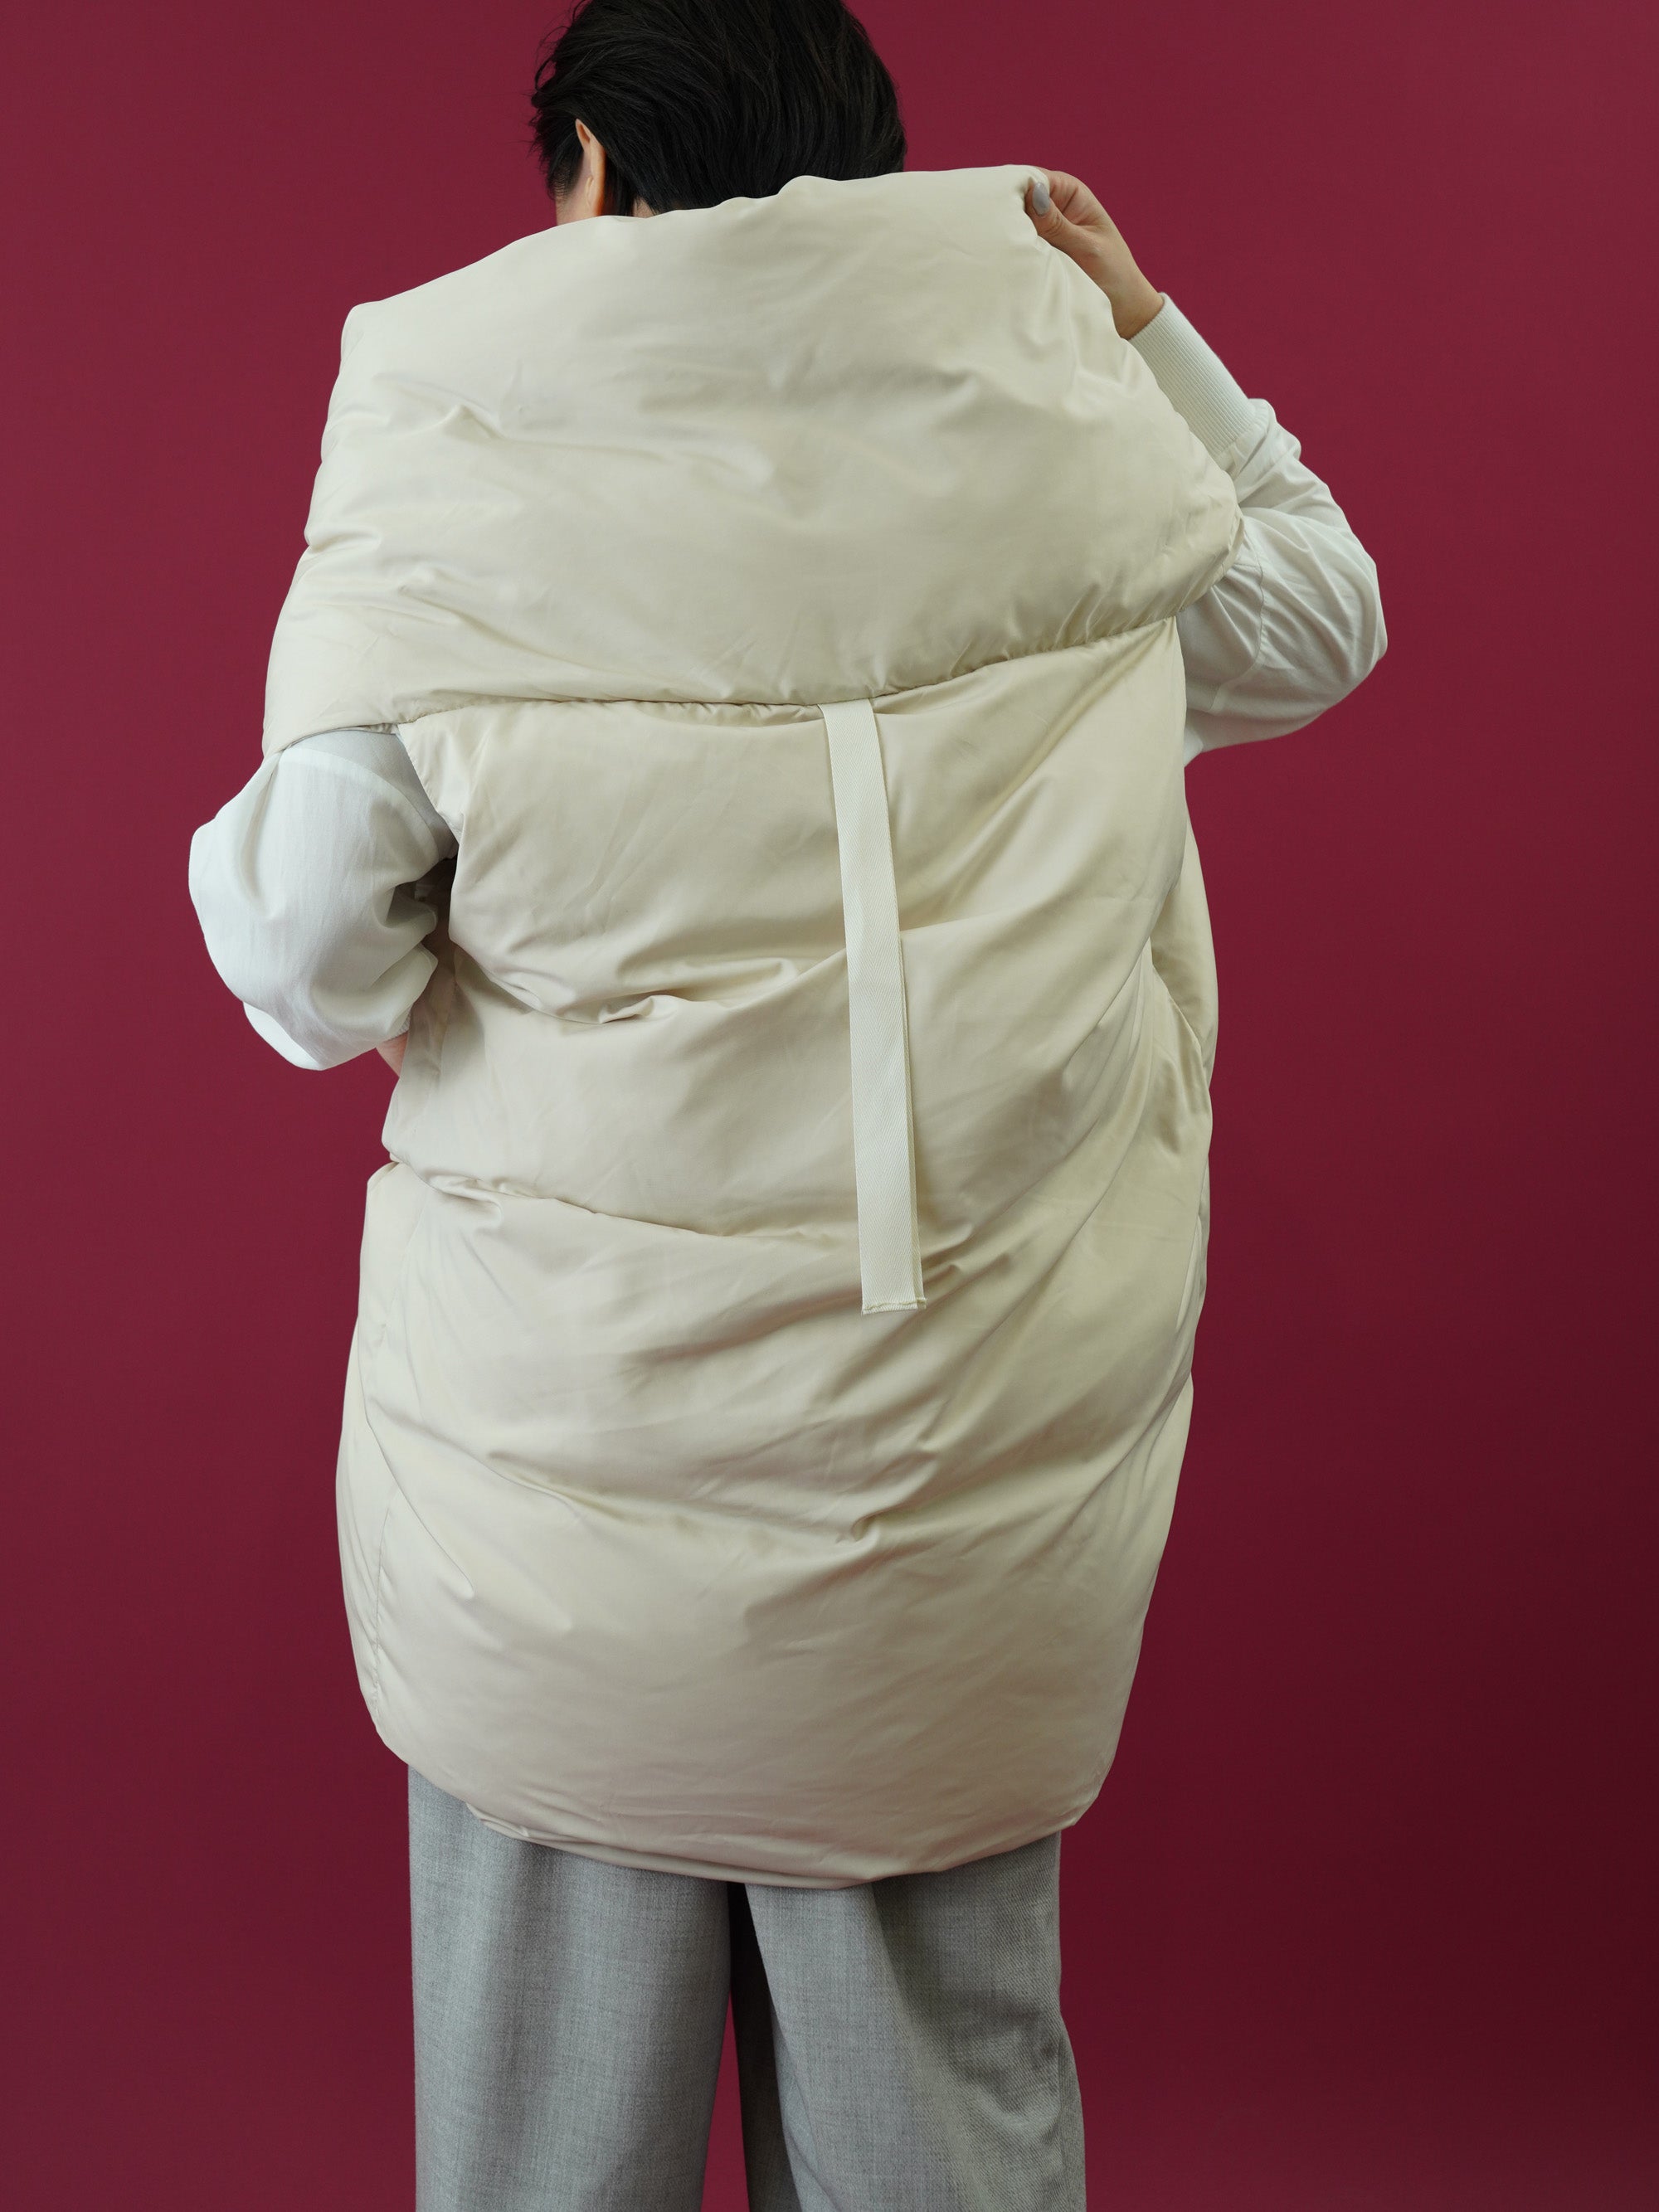 Ytfsrukp Oversized Long Down Vest for Women Outdoor Coats with Hood Long  Puffer Vest Winter Coats Sleeveless Warm Jacket